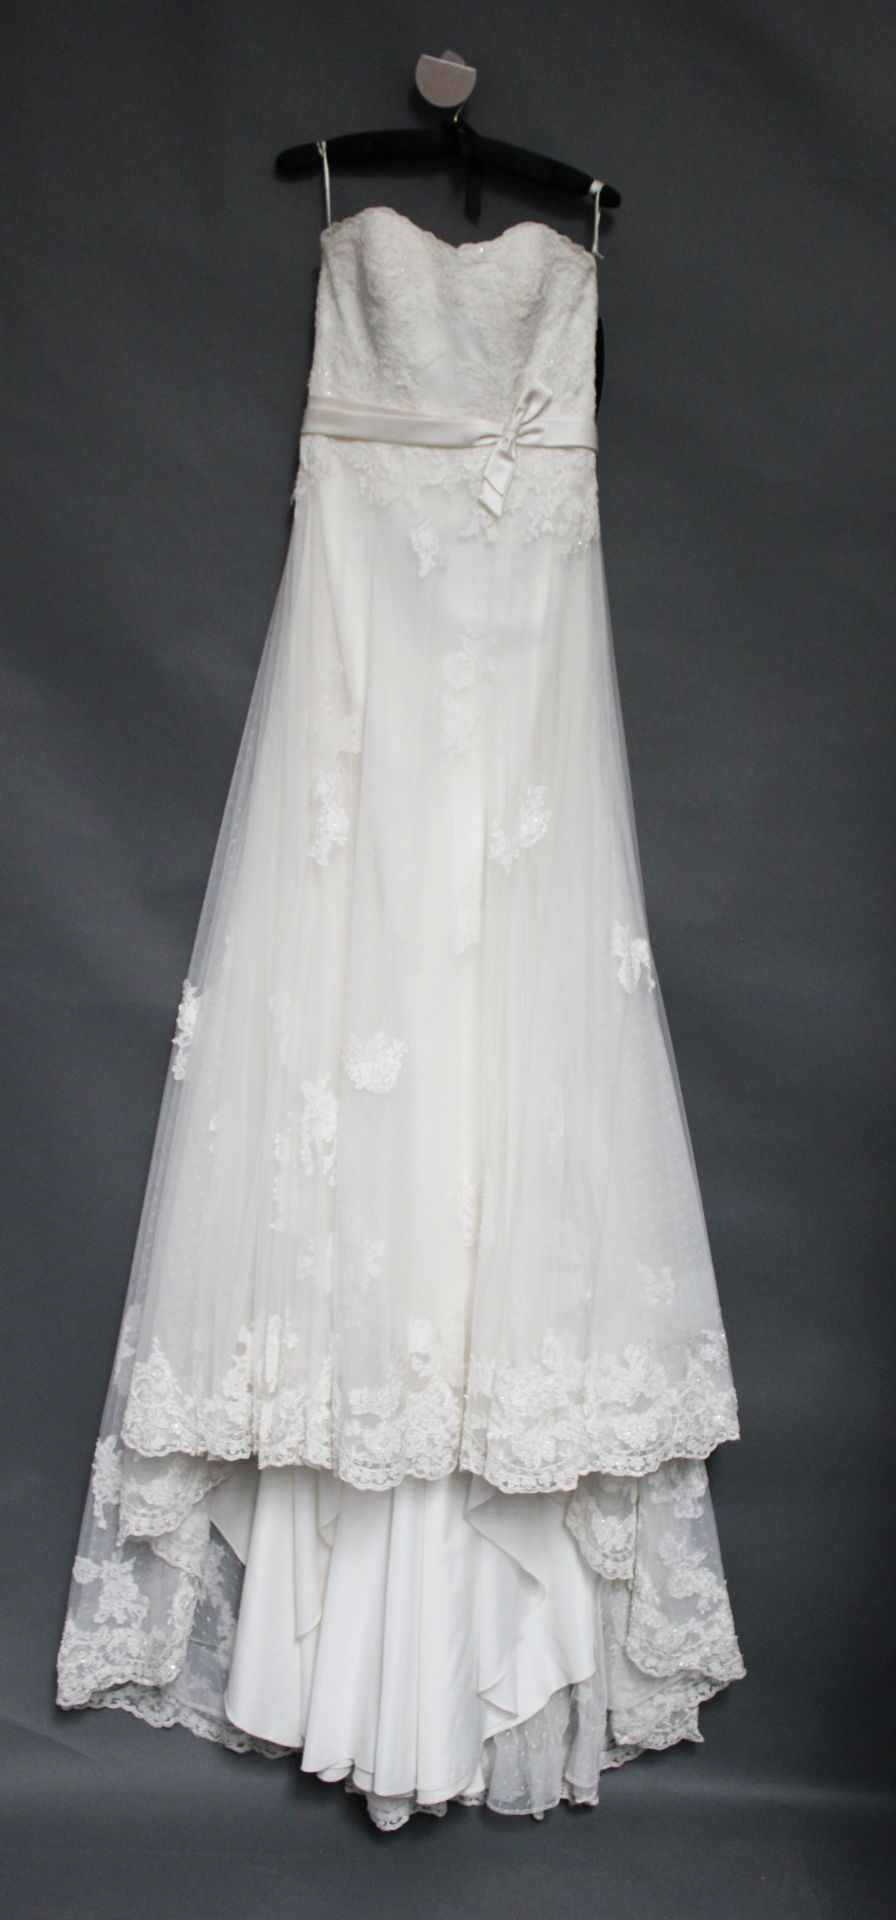 1 x ALAN HANNAH/LM 'Rachana' Strapless Lace And Beaded Designer Wedding Dress RRP £2,290 UK14